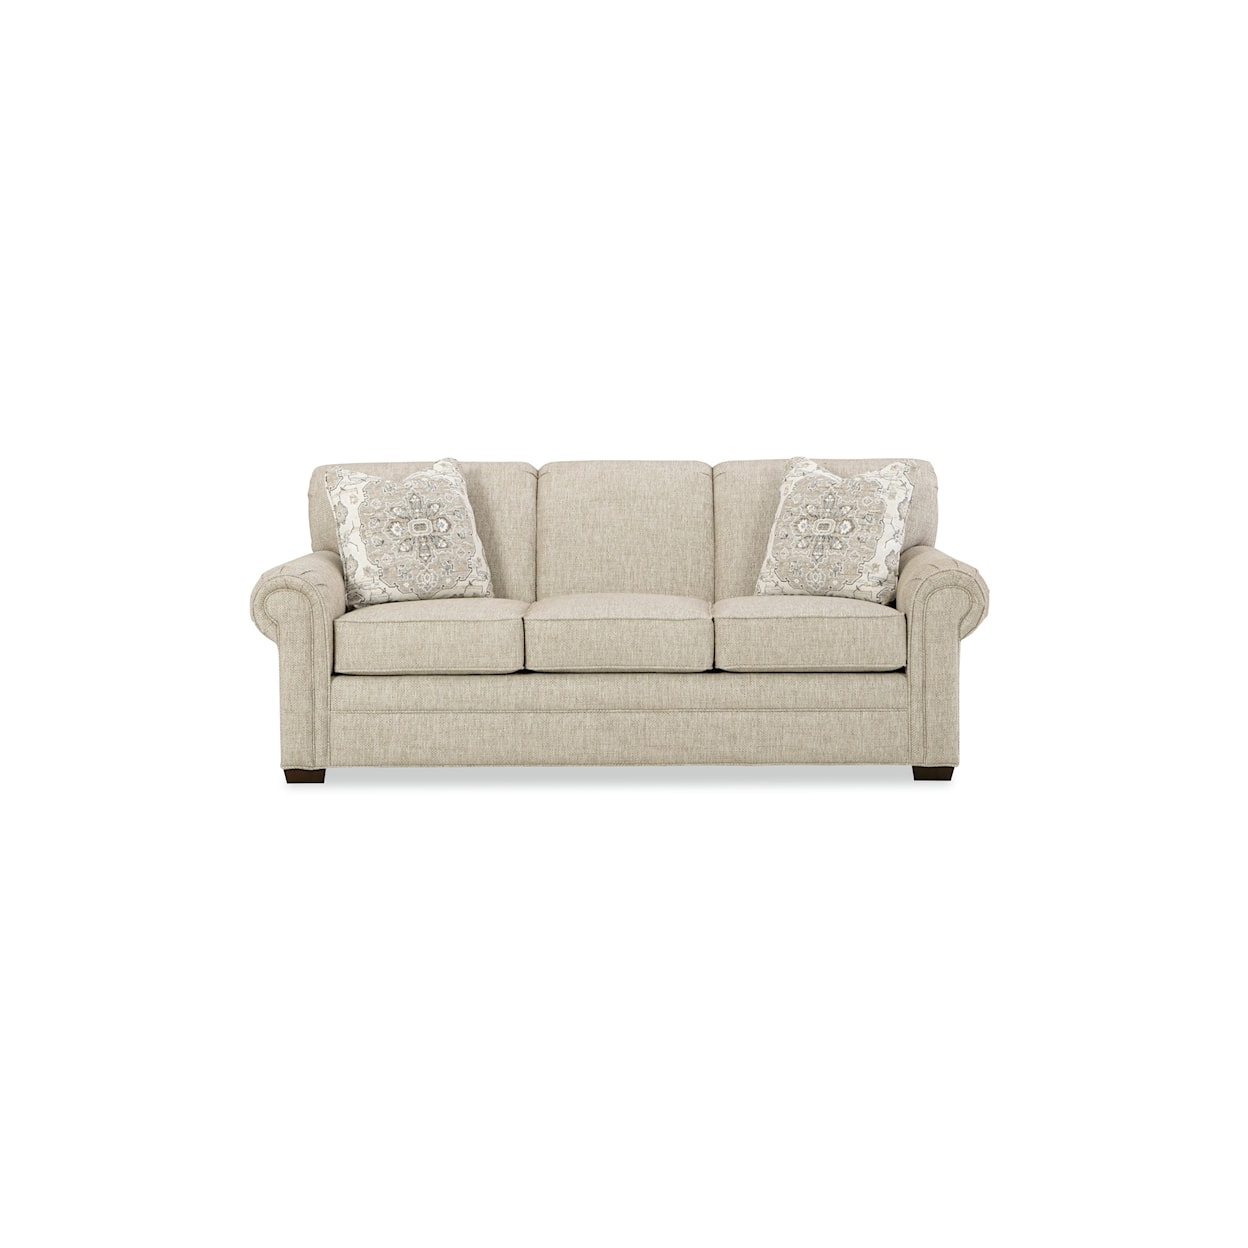 Hickorycraft 726150 Queen Sleeper Sofa